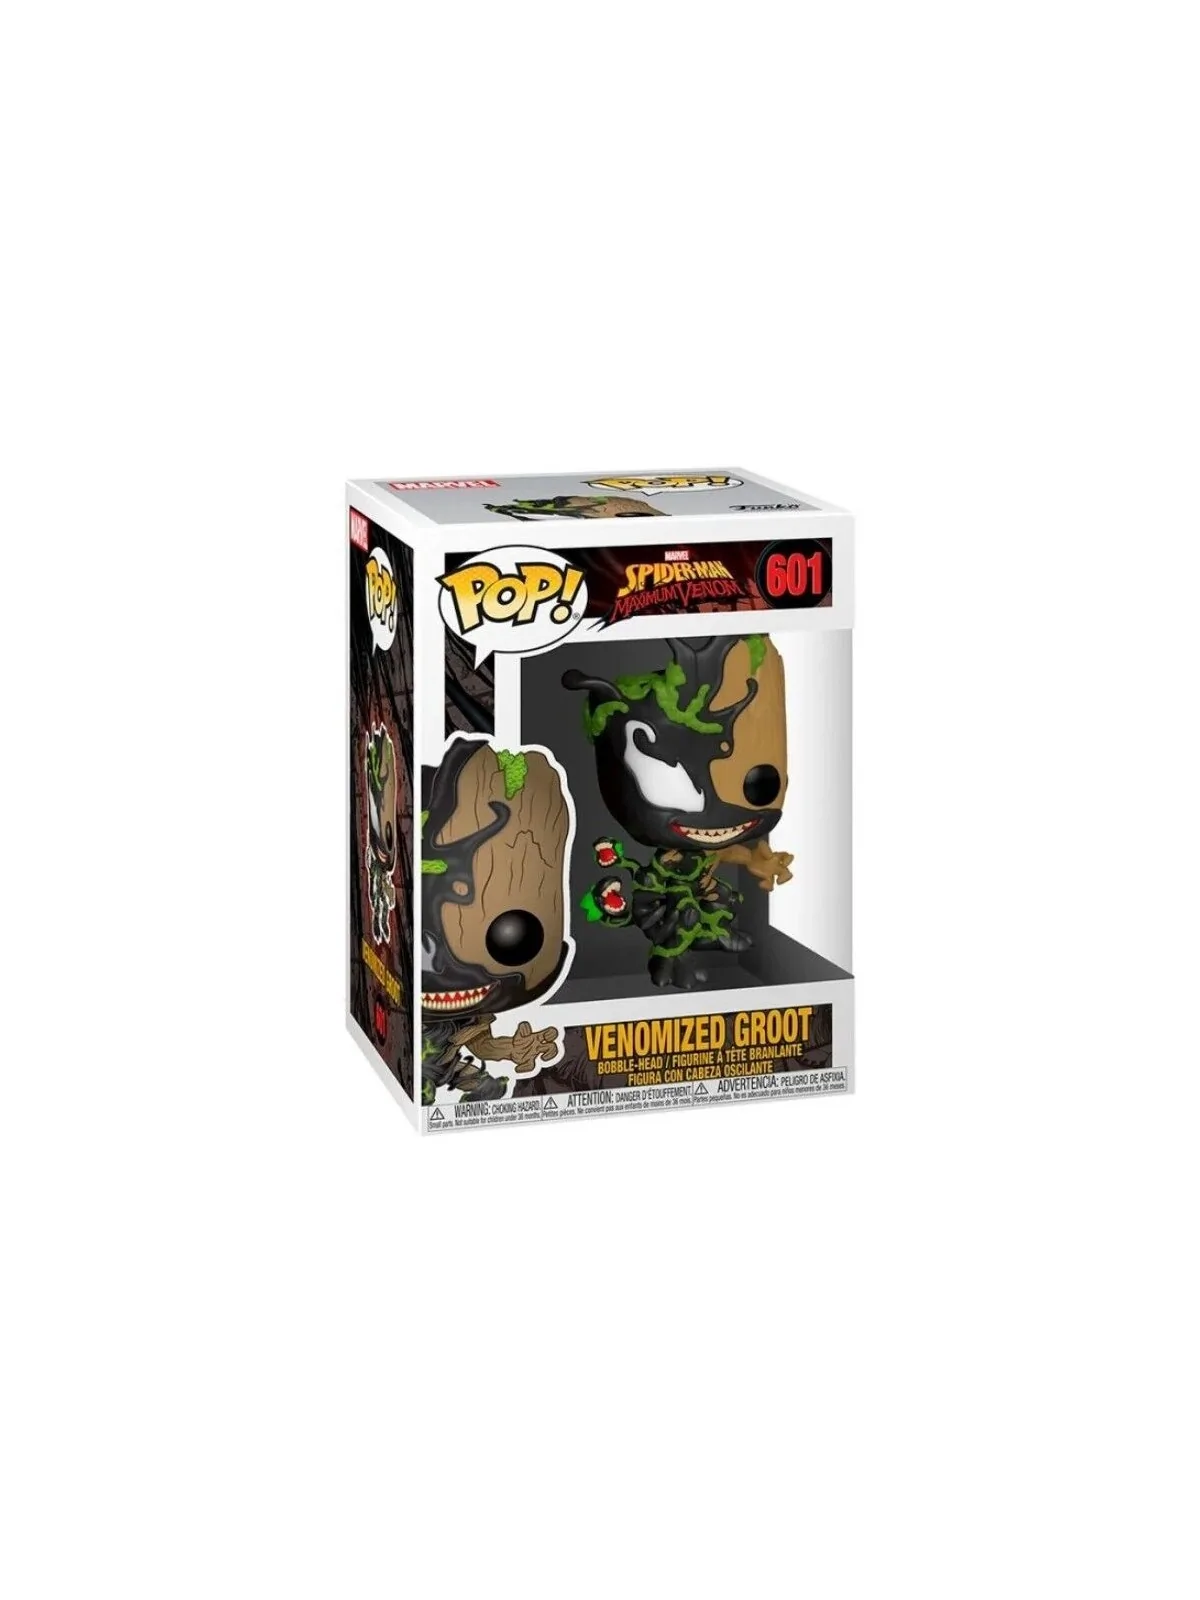 Comprar Figura POP! Marvel Max Venom Groot (601) barato al mejor preci